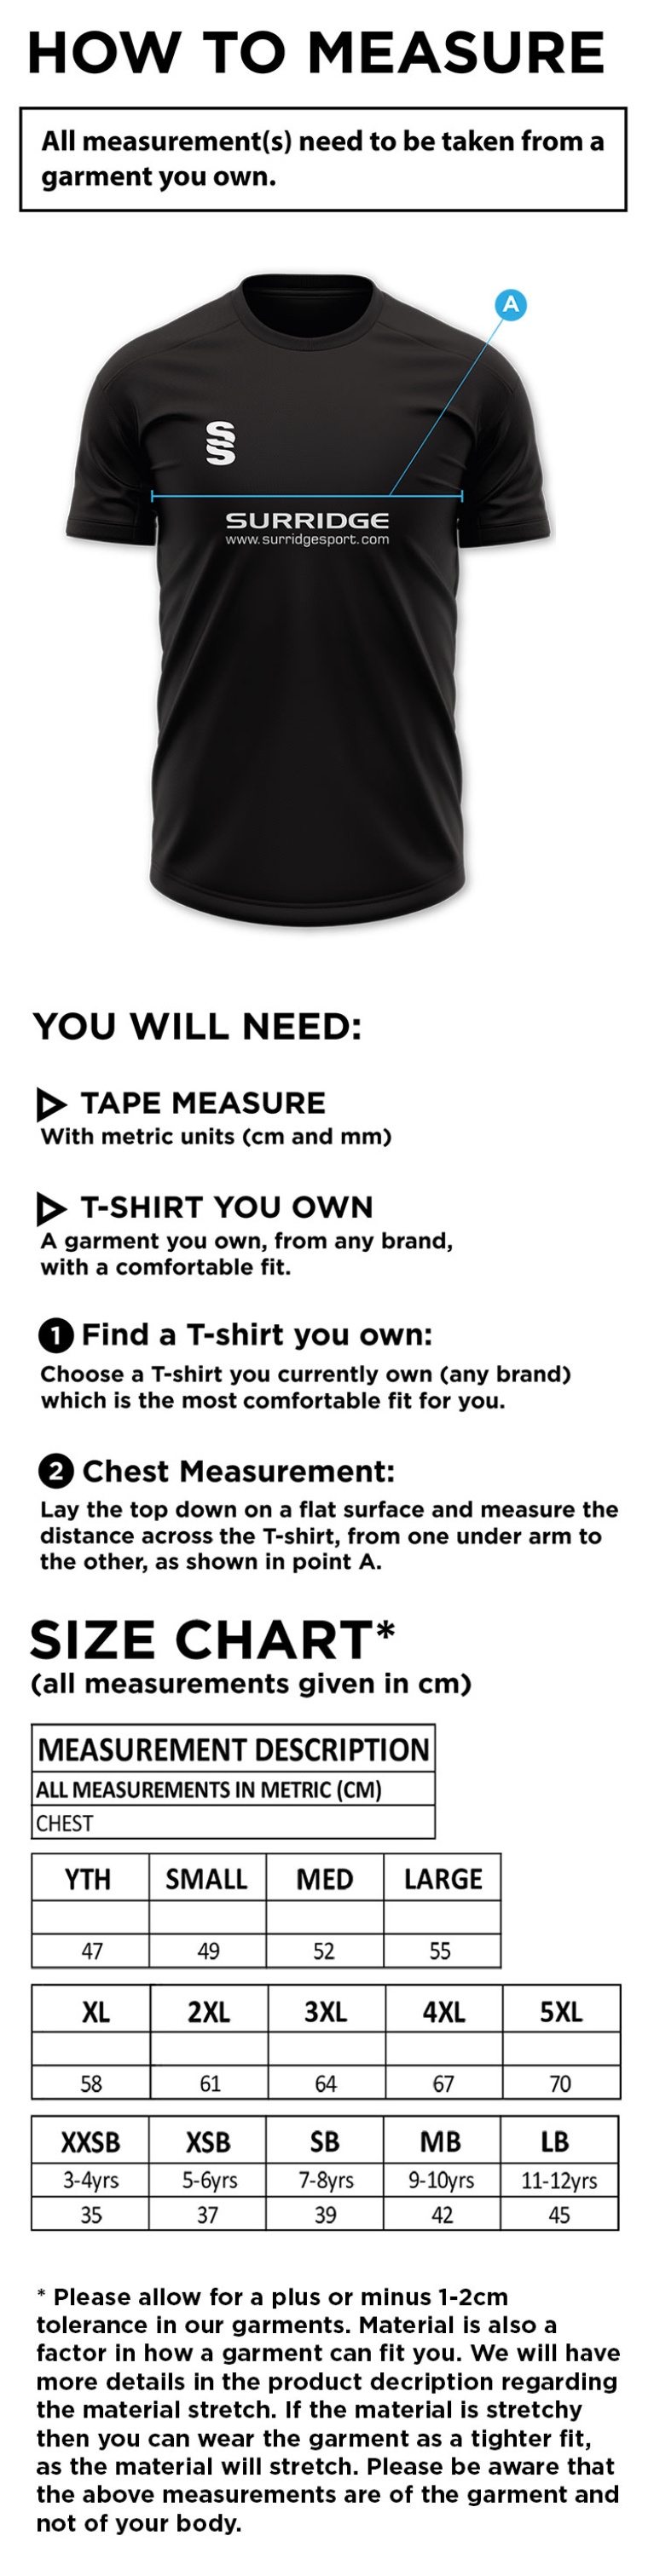 South Shore CC - Blade Polo Shirt - Size Guide